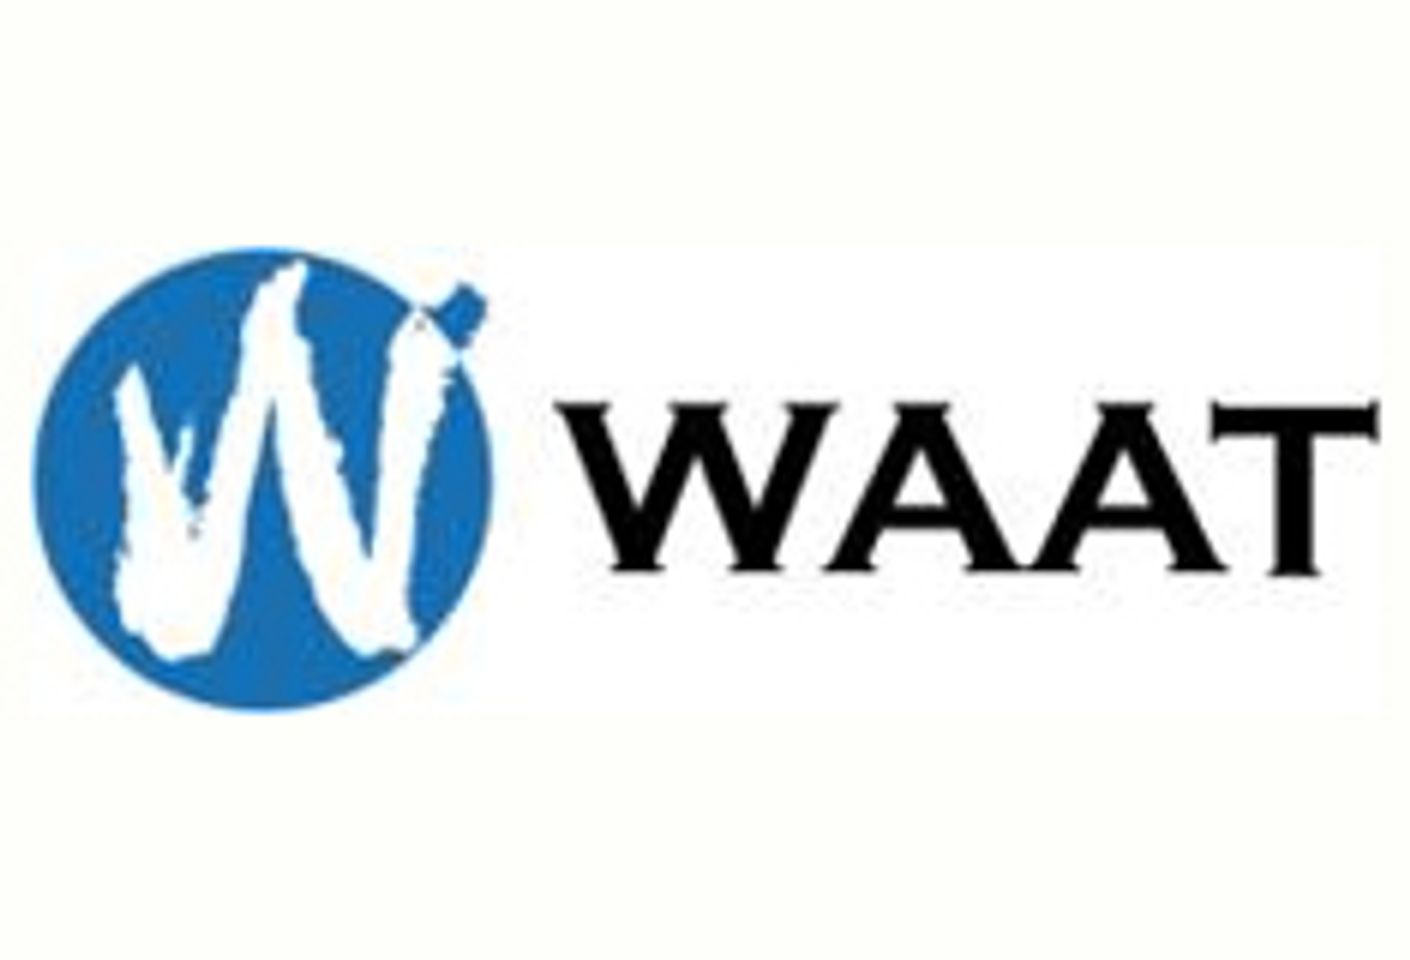 Waat Media Acquires Mobile Game Developer Charismatix